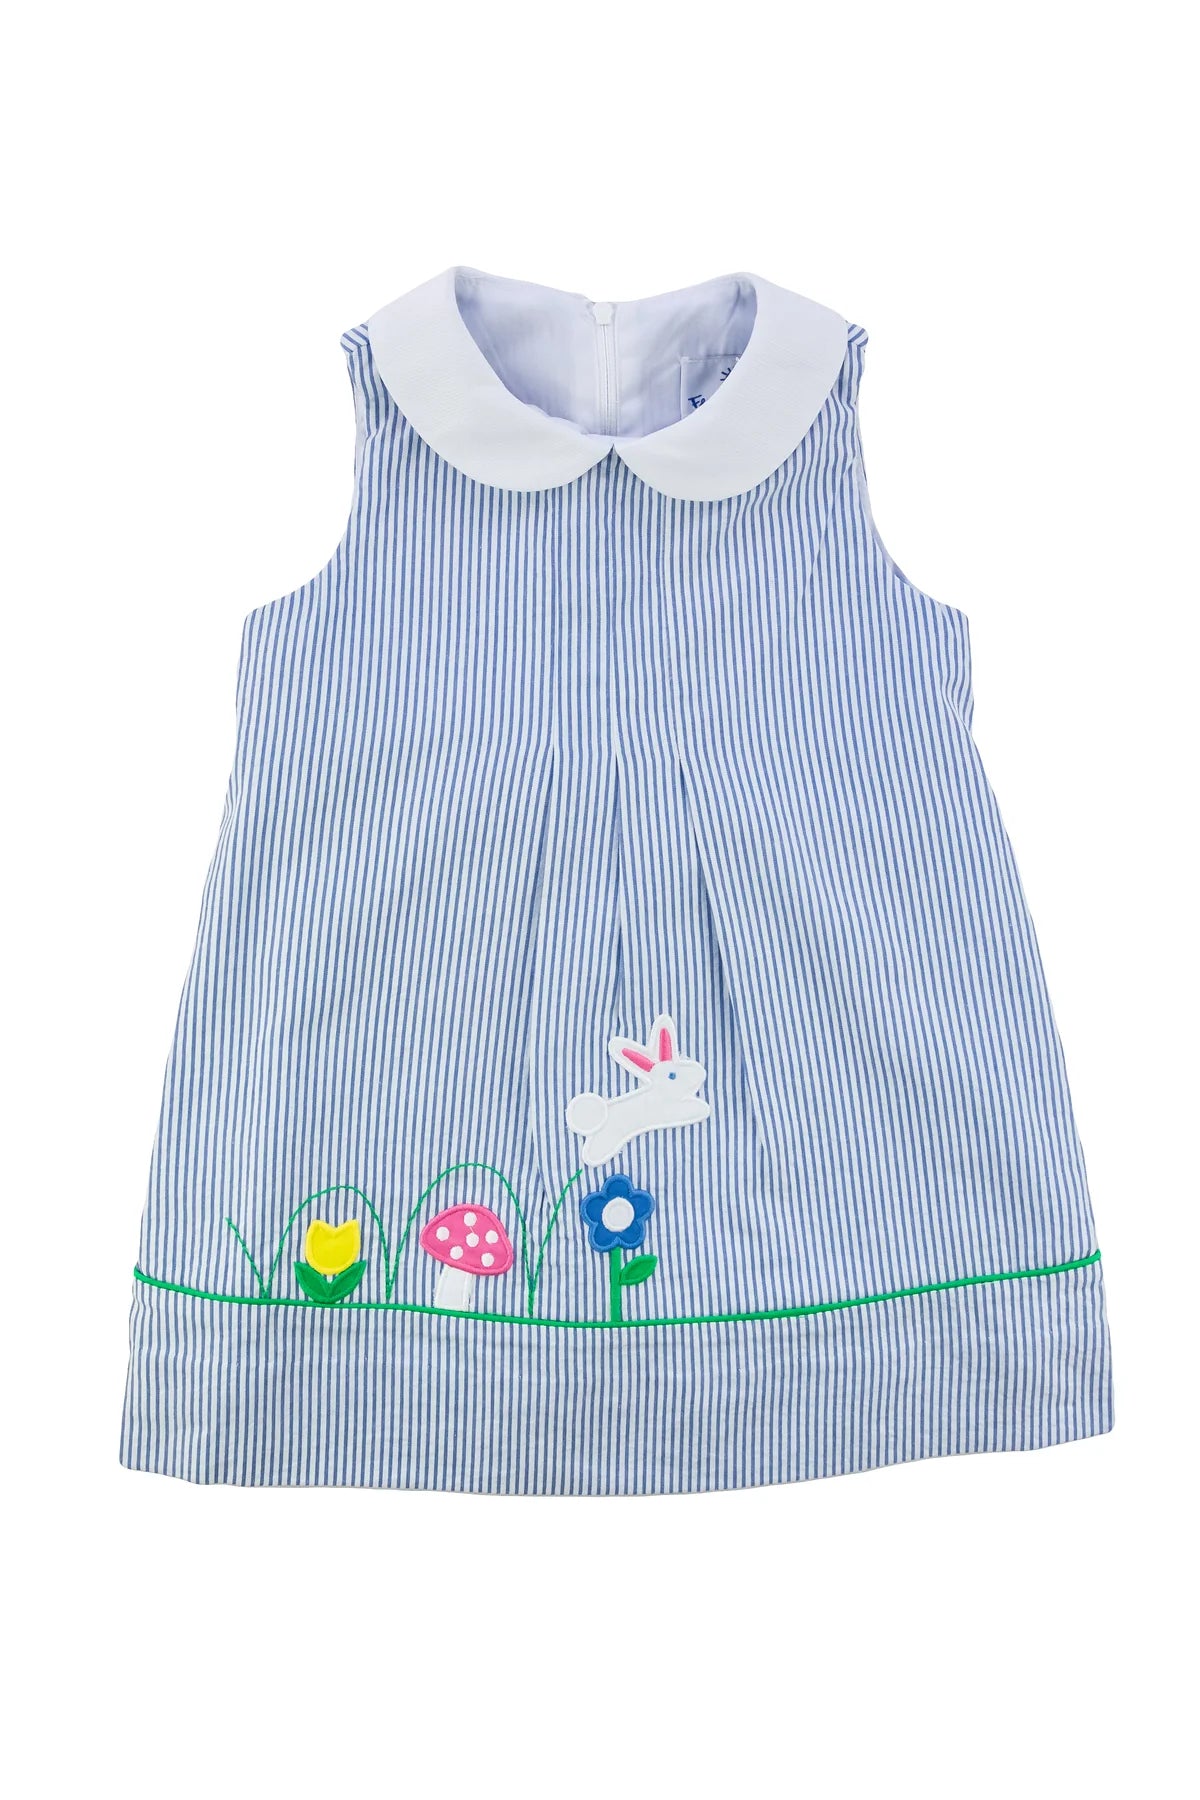 Florence Eiseman infant & girls seersucker dress with flowers & bunny